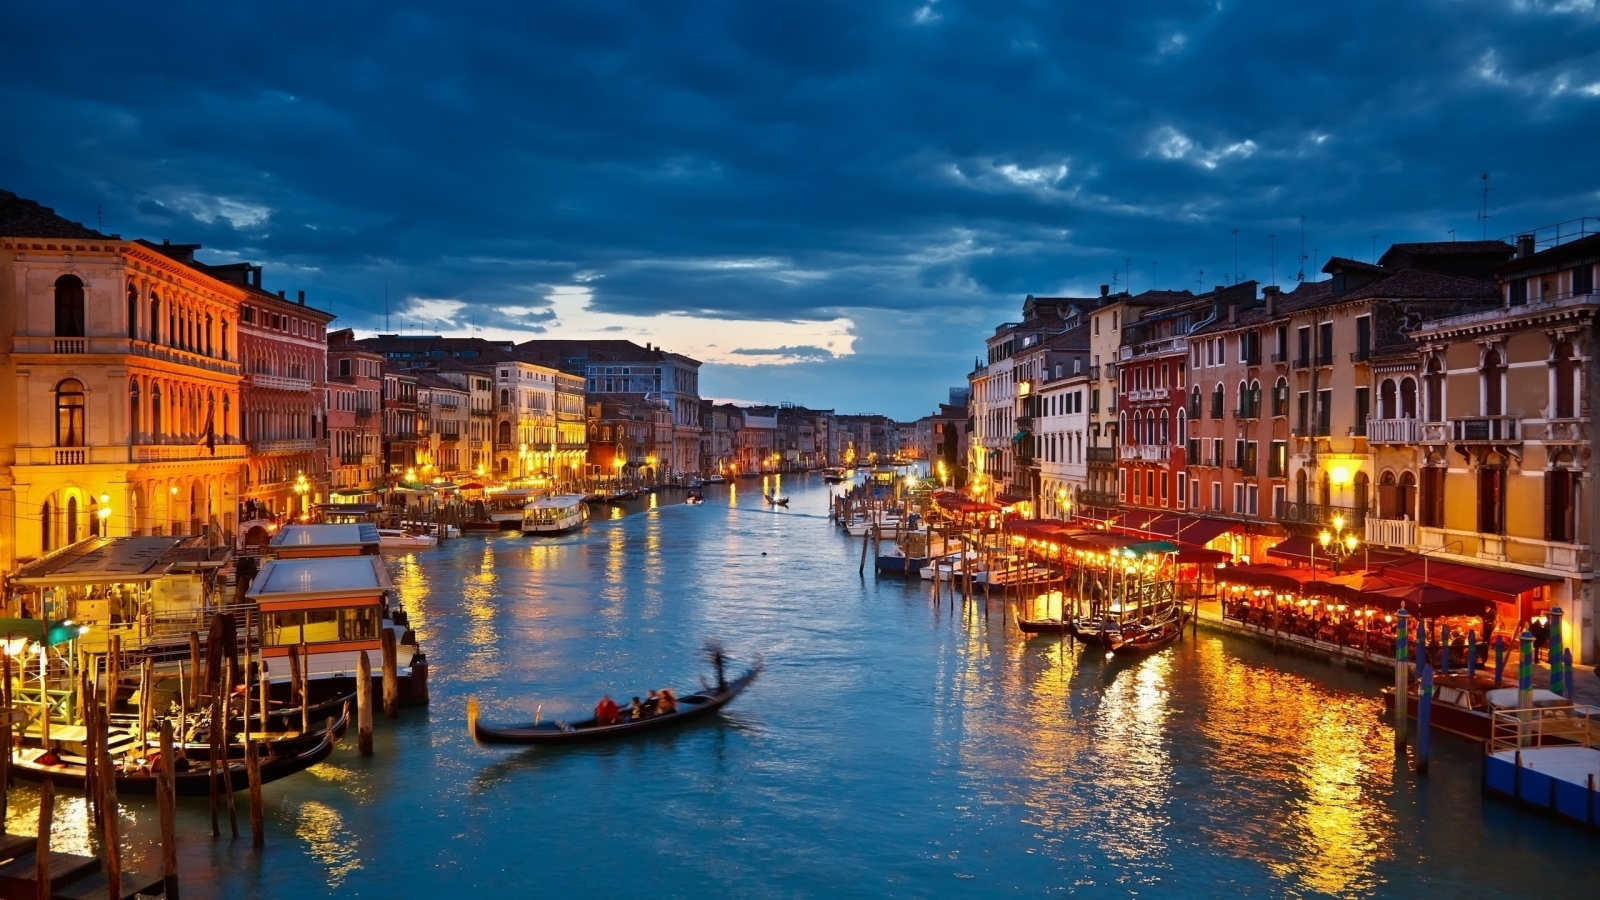 Night in Venice for 1600 x 900 HDTV resolution